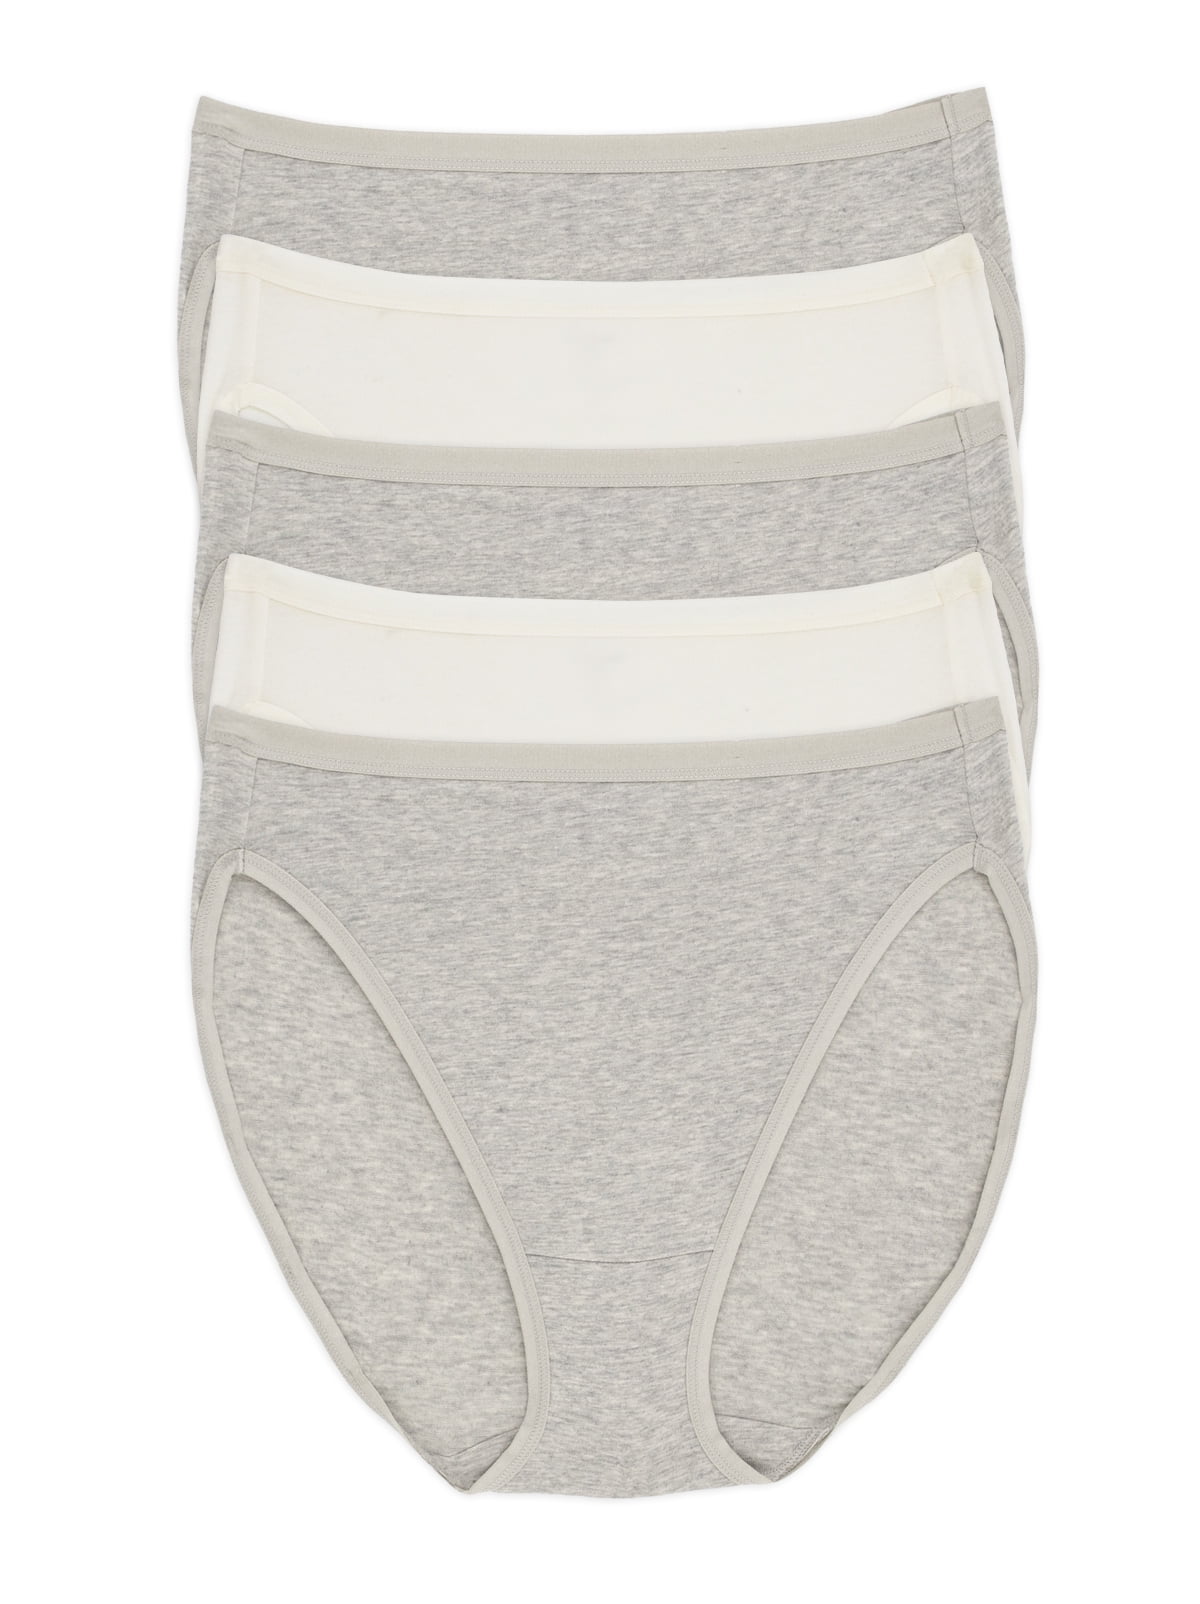 Organic Cotton Stretch Hi Cut Panty 5-Pack  Felina Women's Underwear  (White Haze, Small) 